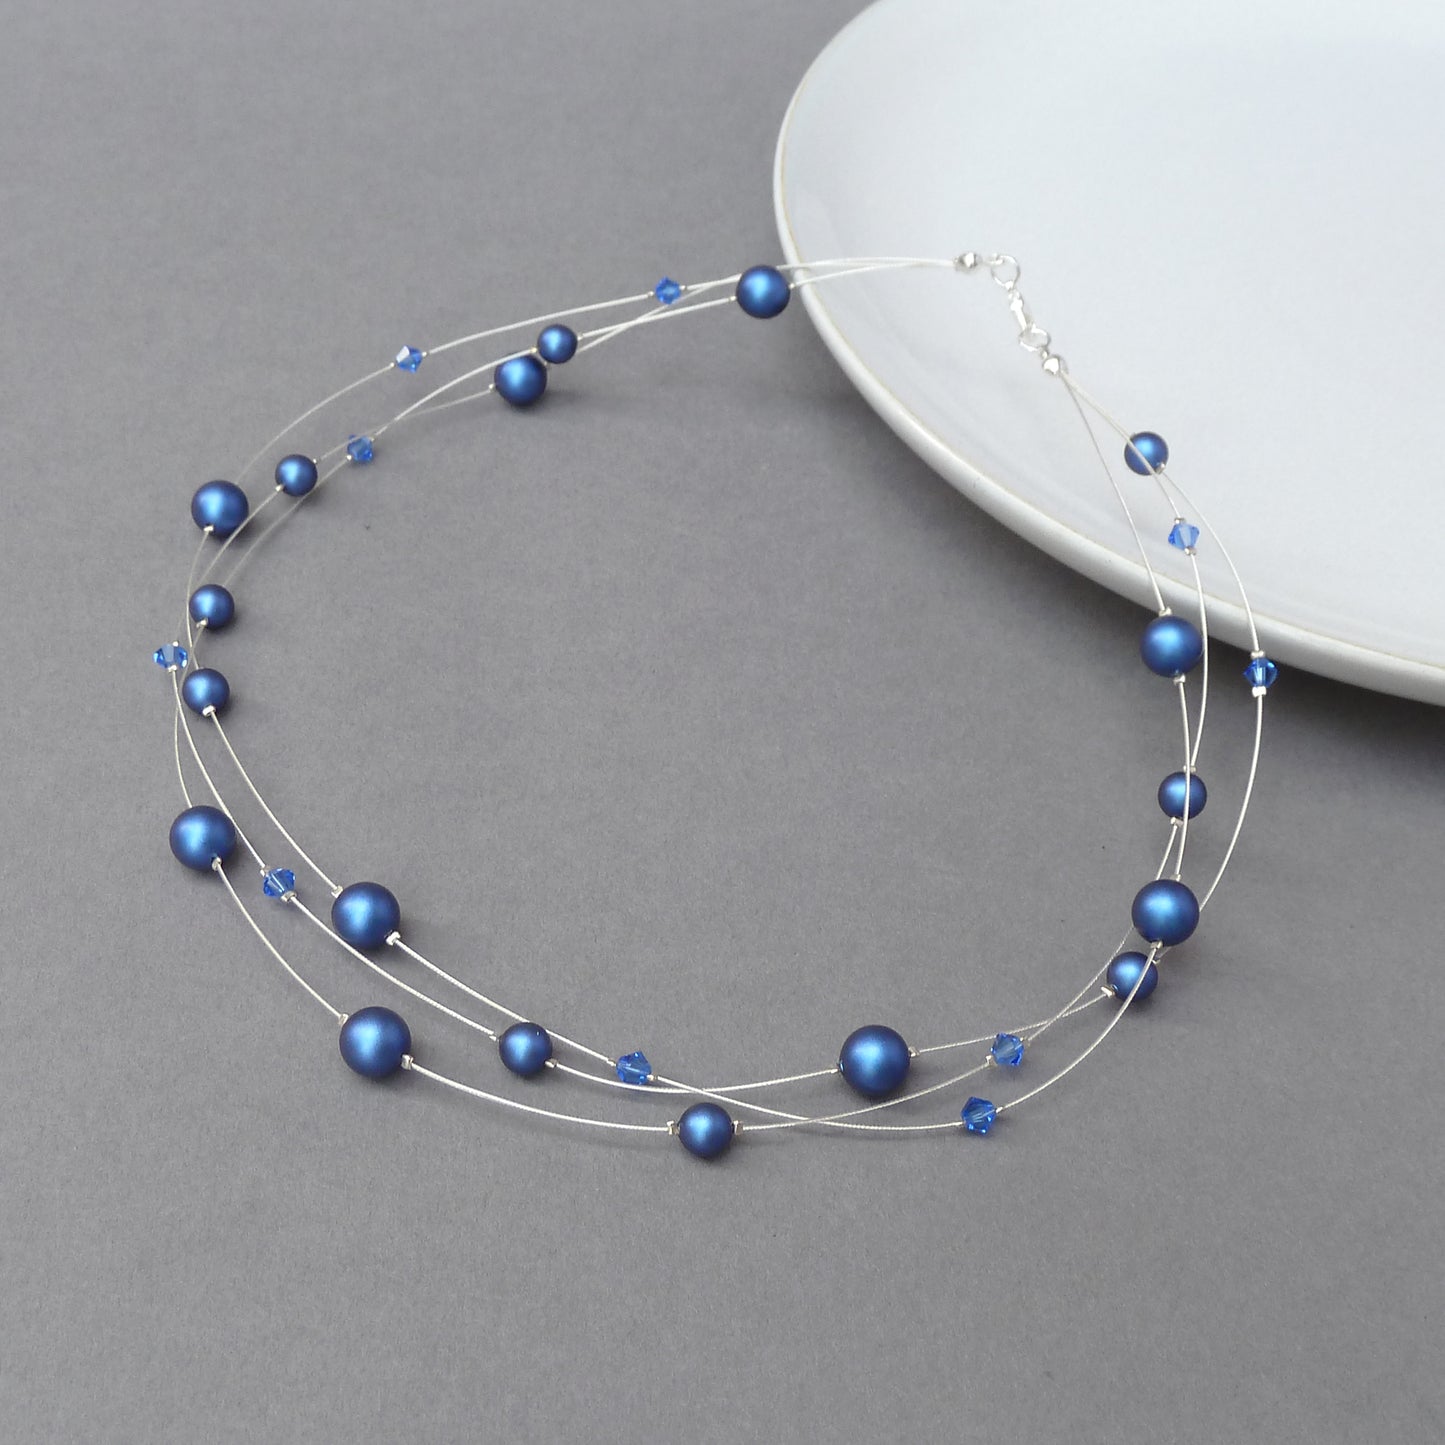 Iridescent dark blue pearl necklace